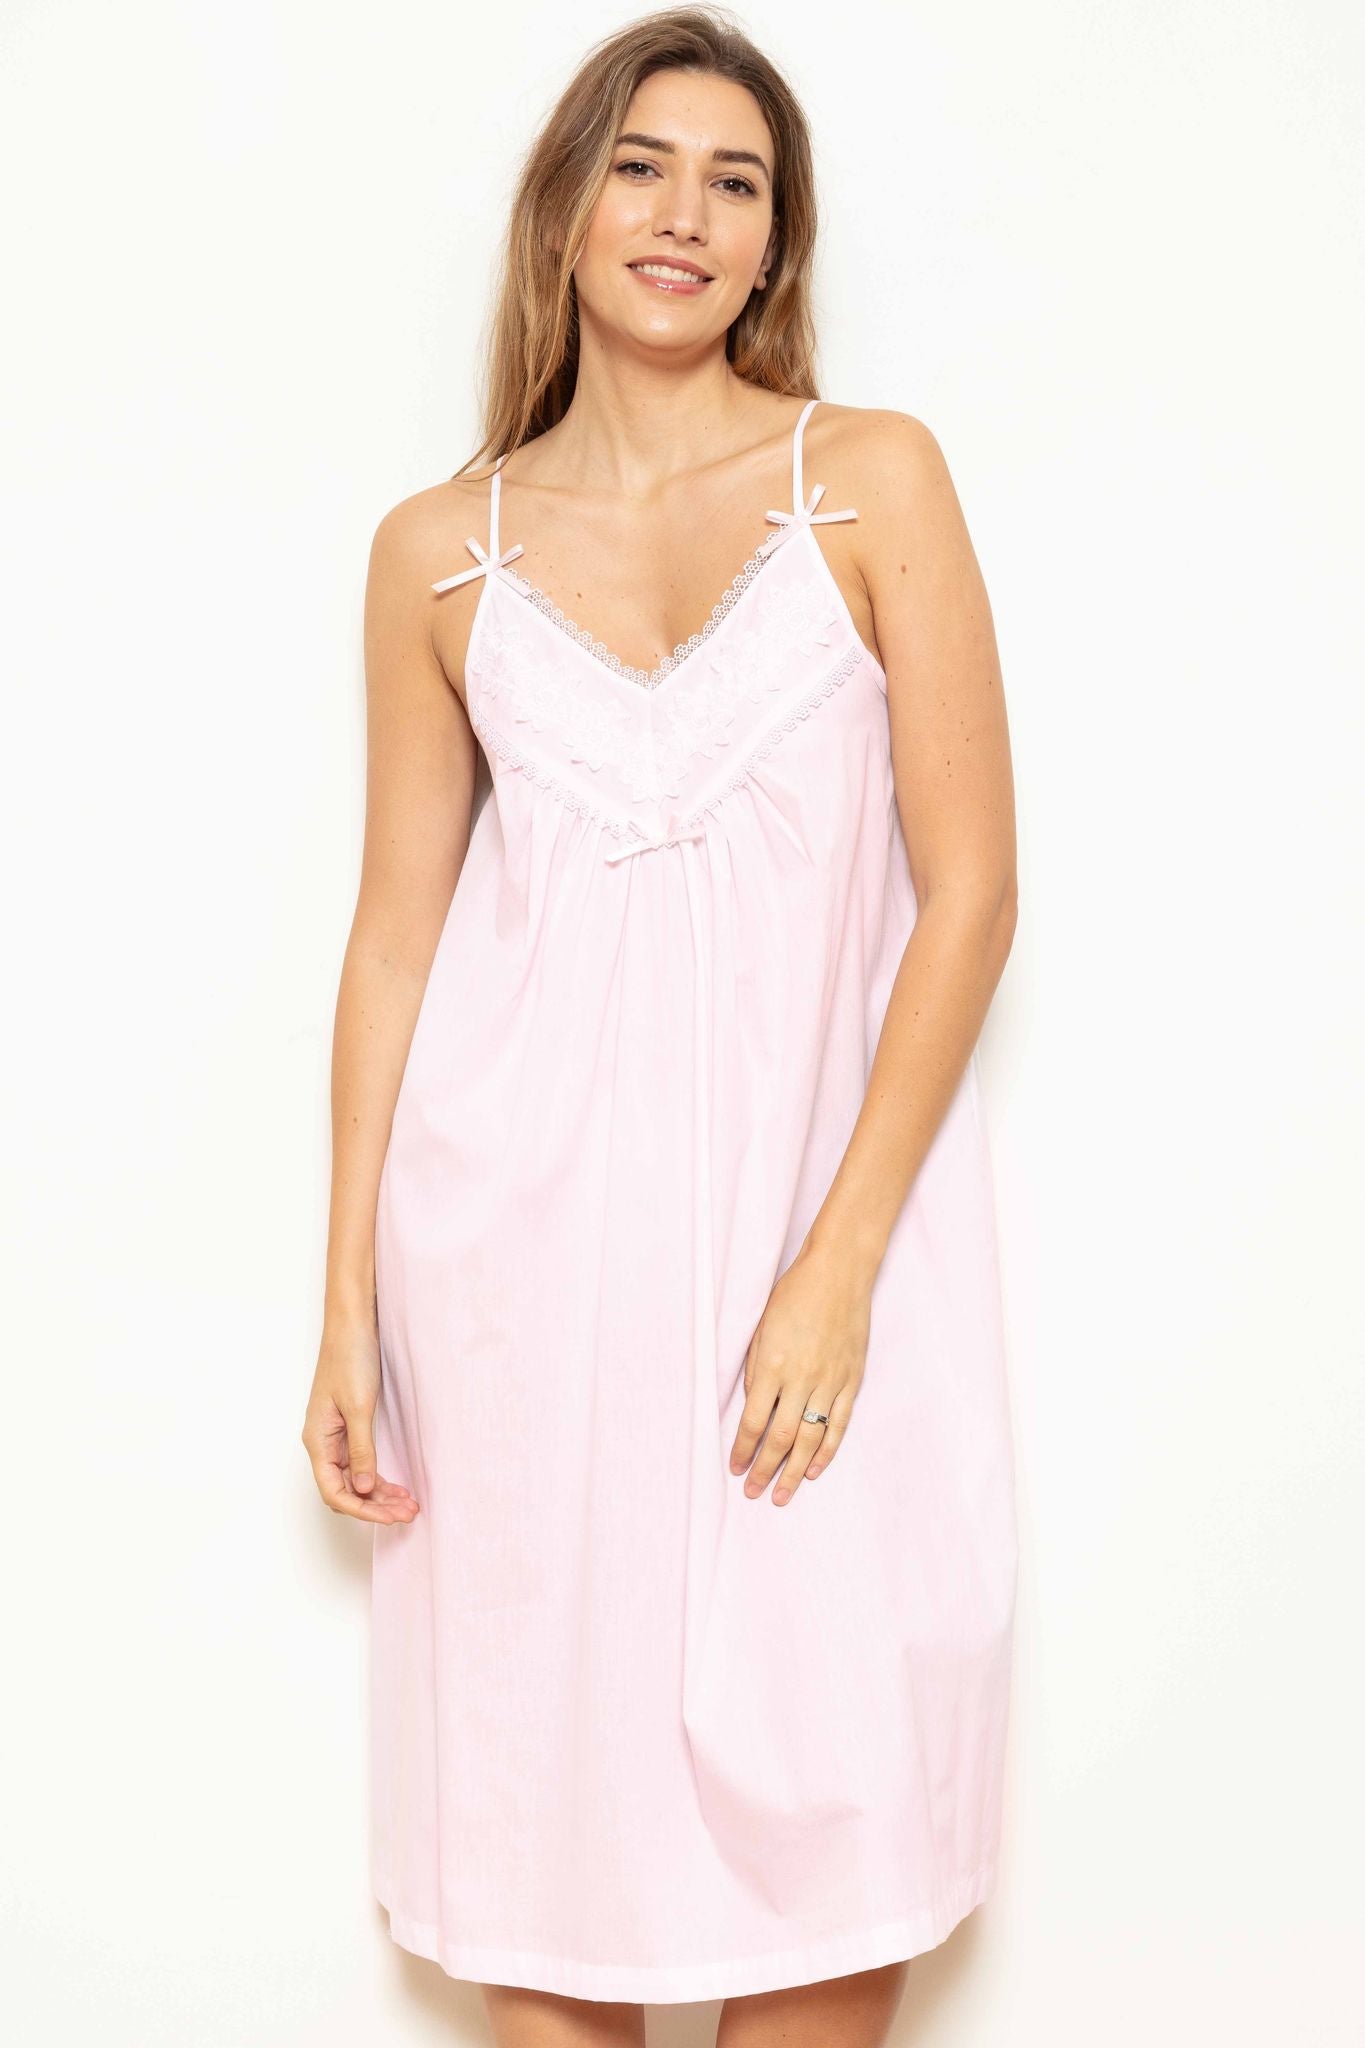 Cottonreal 'Helga' Pink Cotton Strappy Nightdress